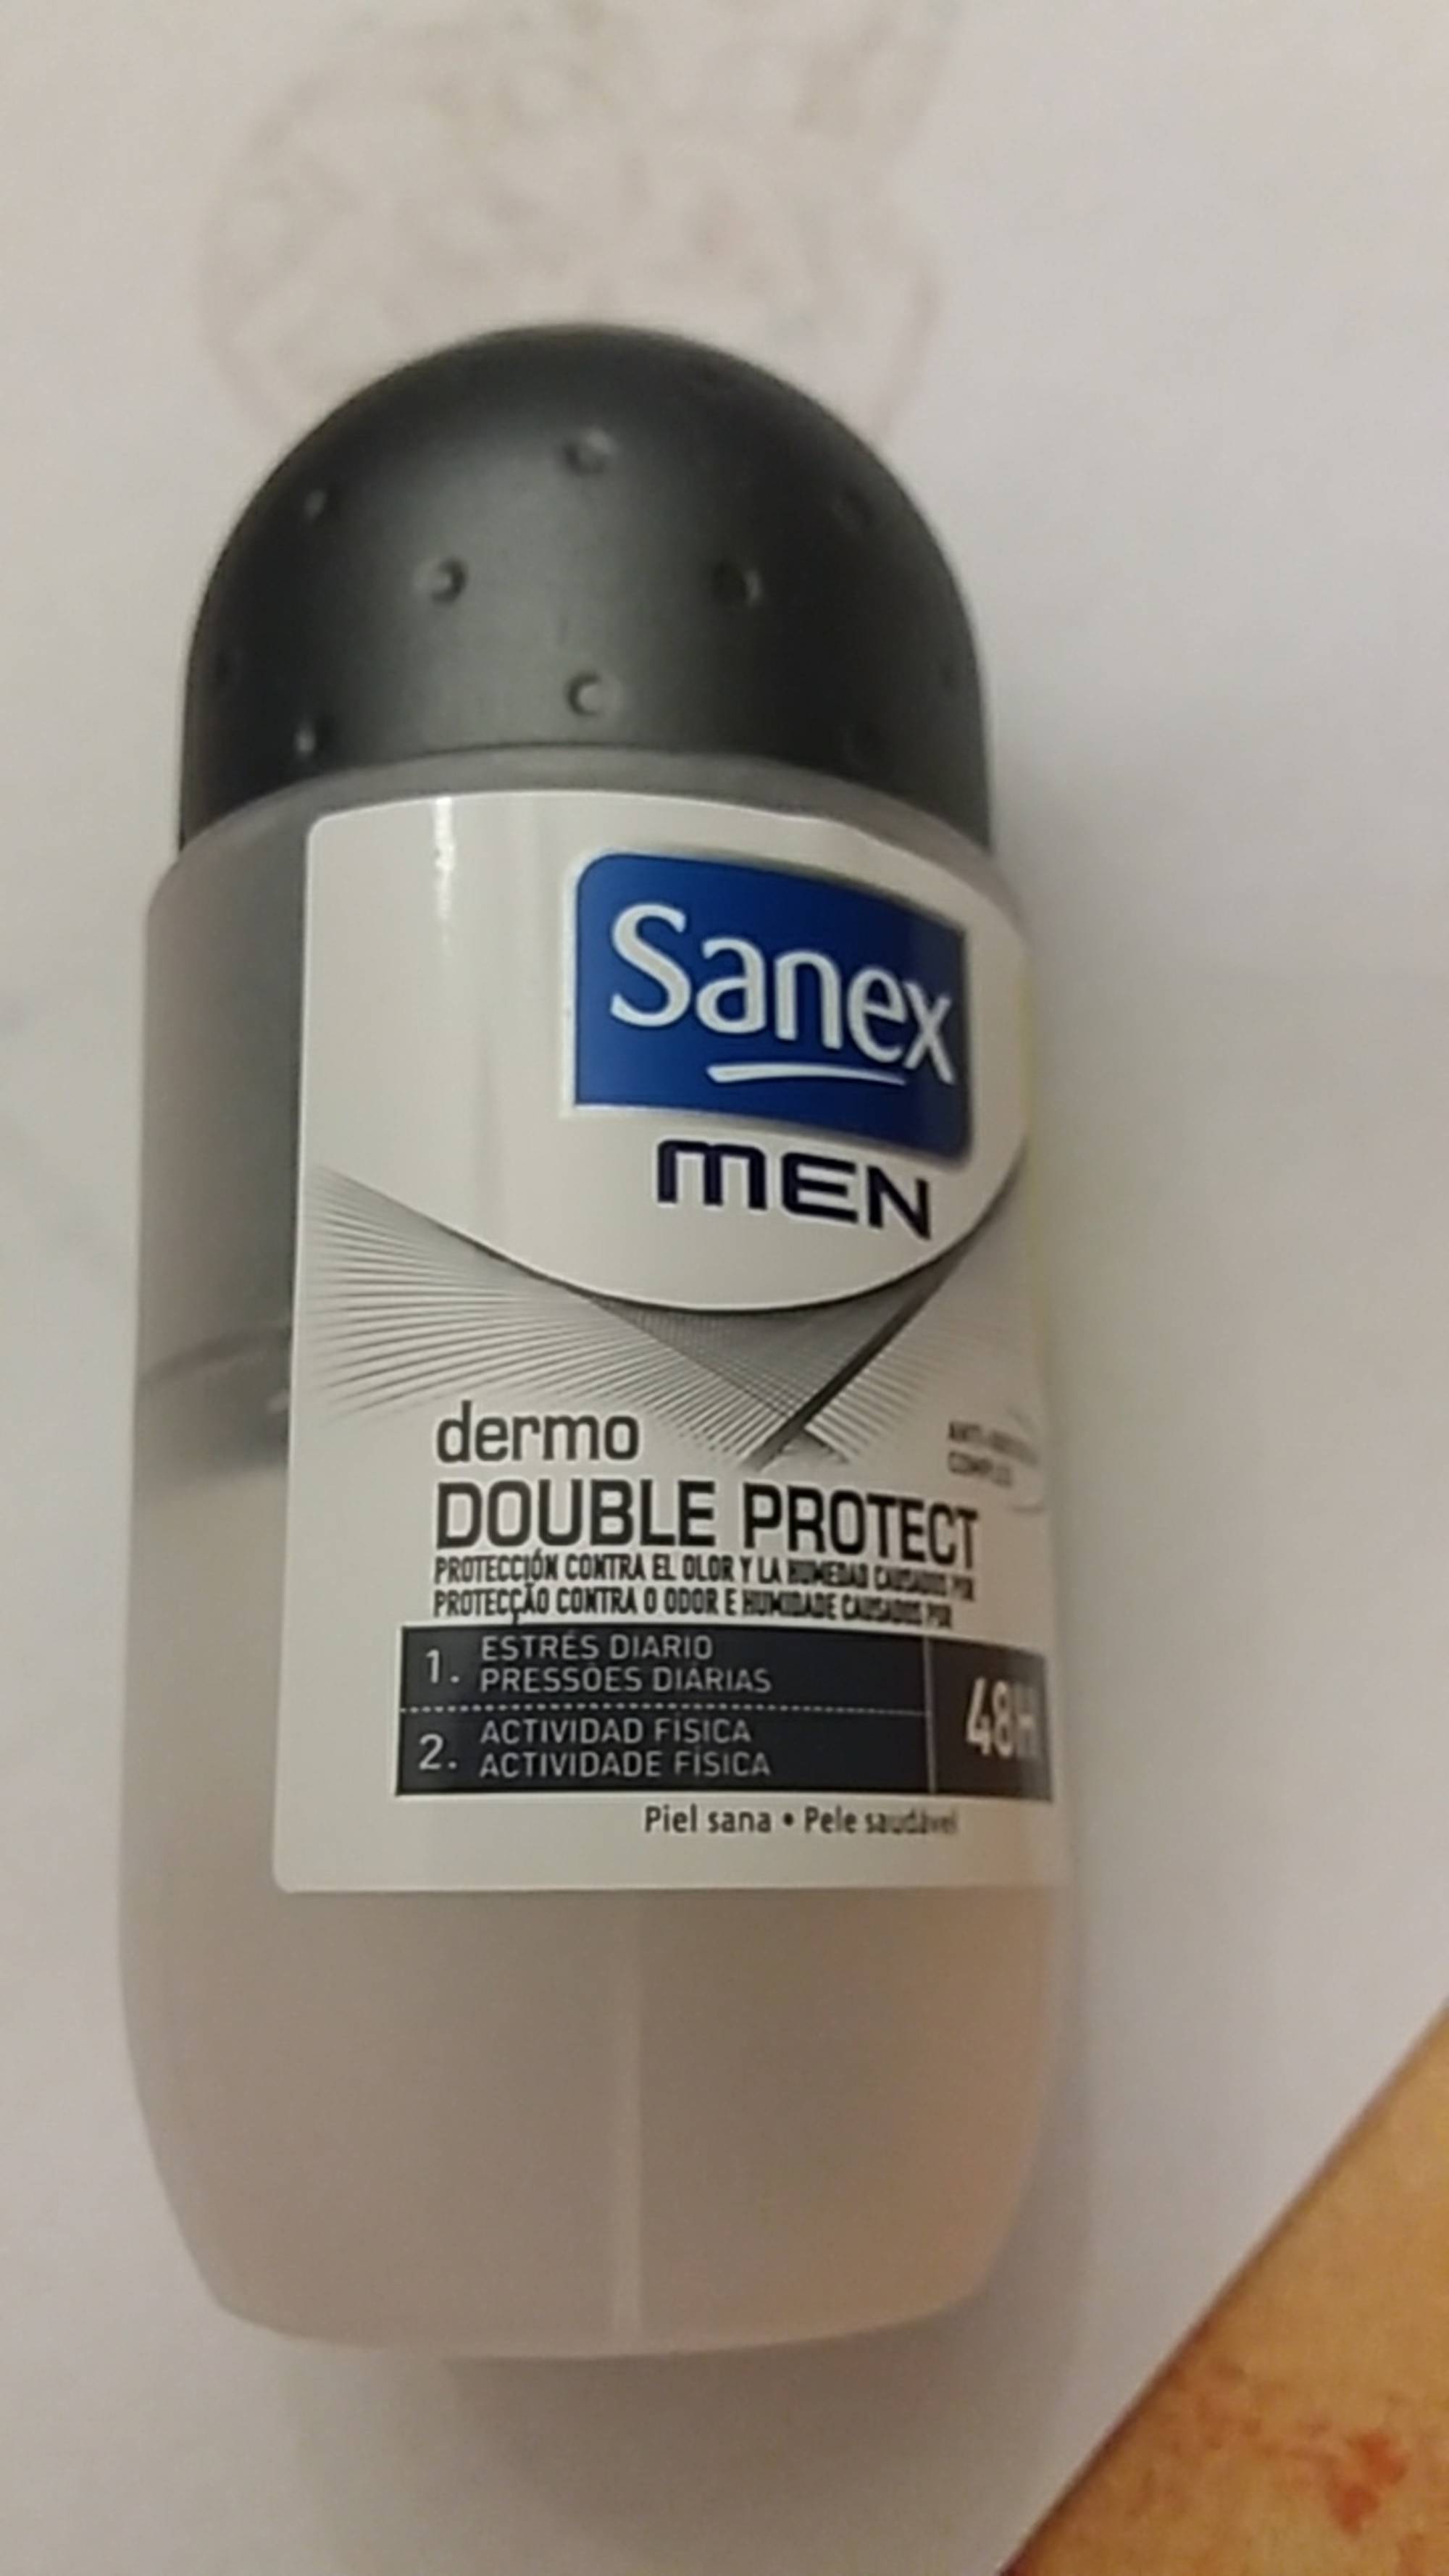 SANEX - Men Dermo double protect